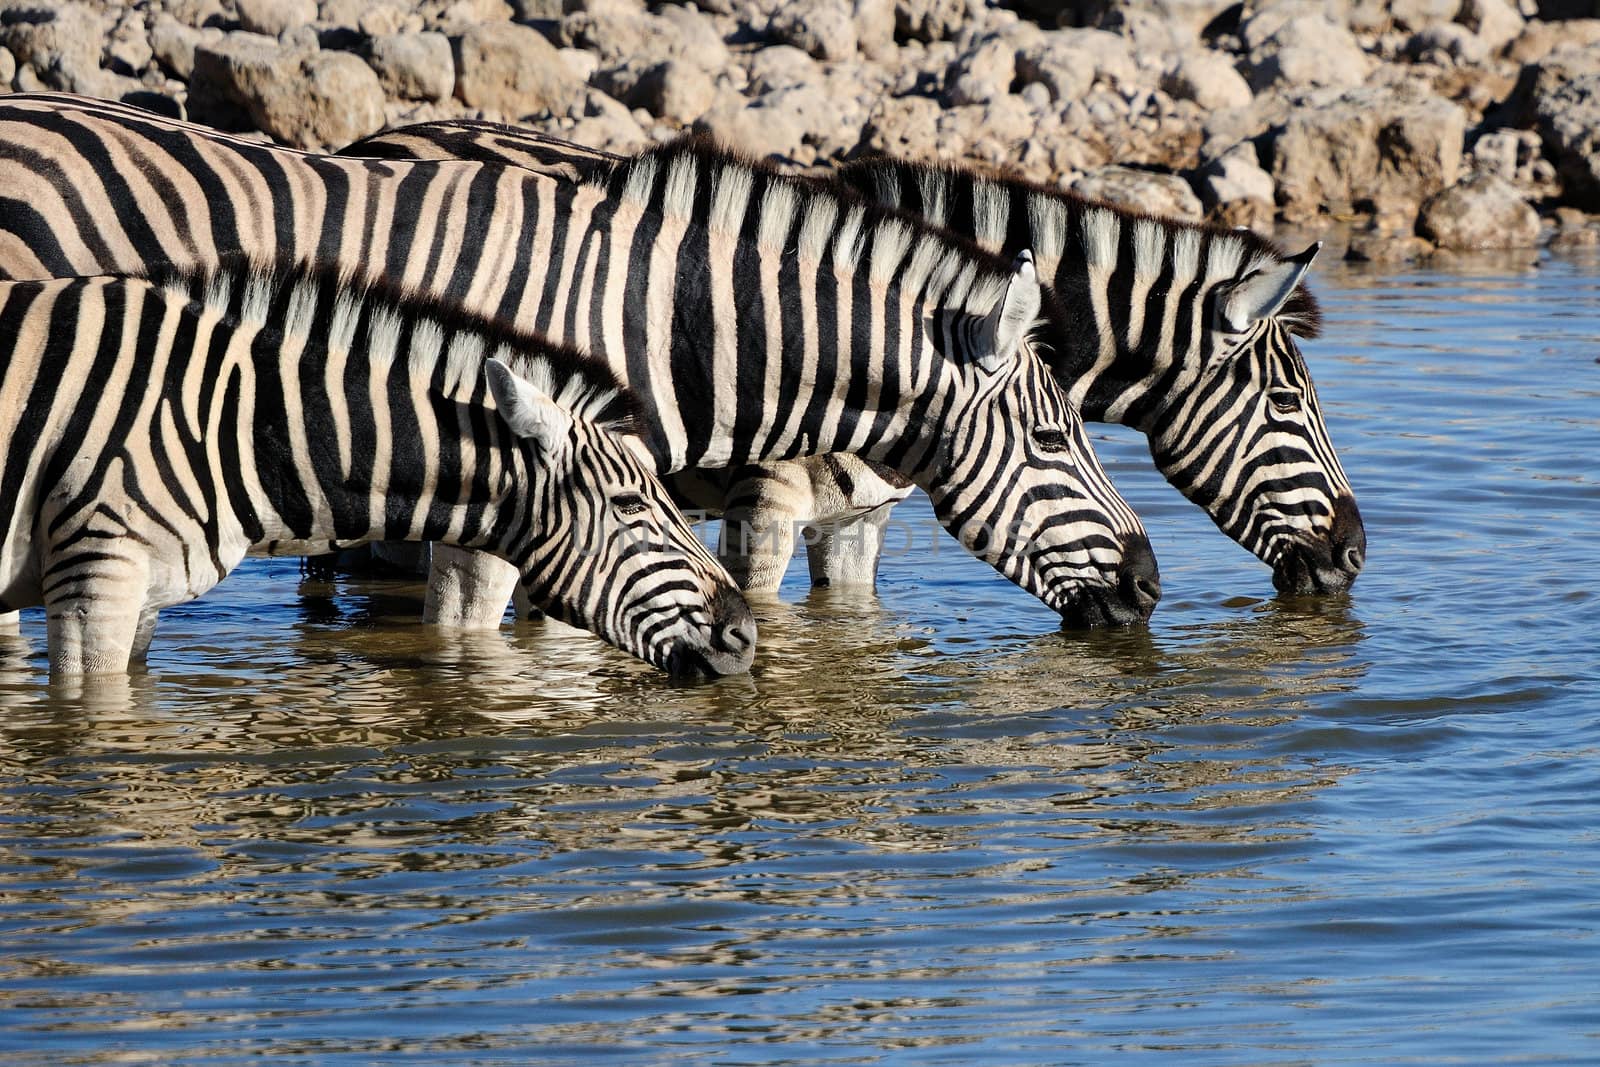 Zebras drinking water, Okaukeujo waterhole, Etosha National Park, Namibia